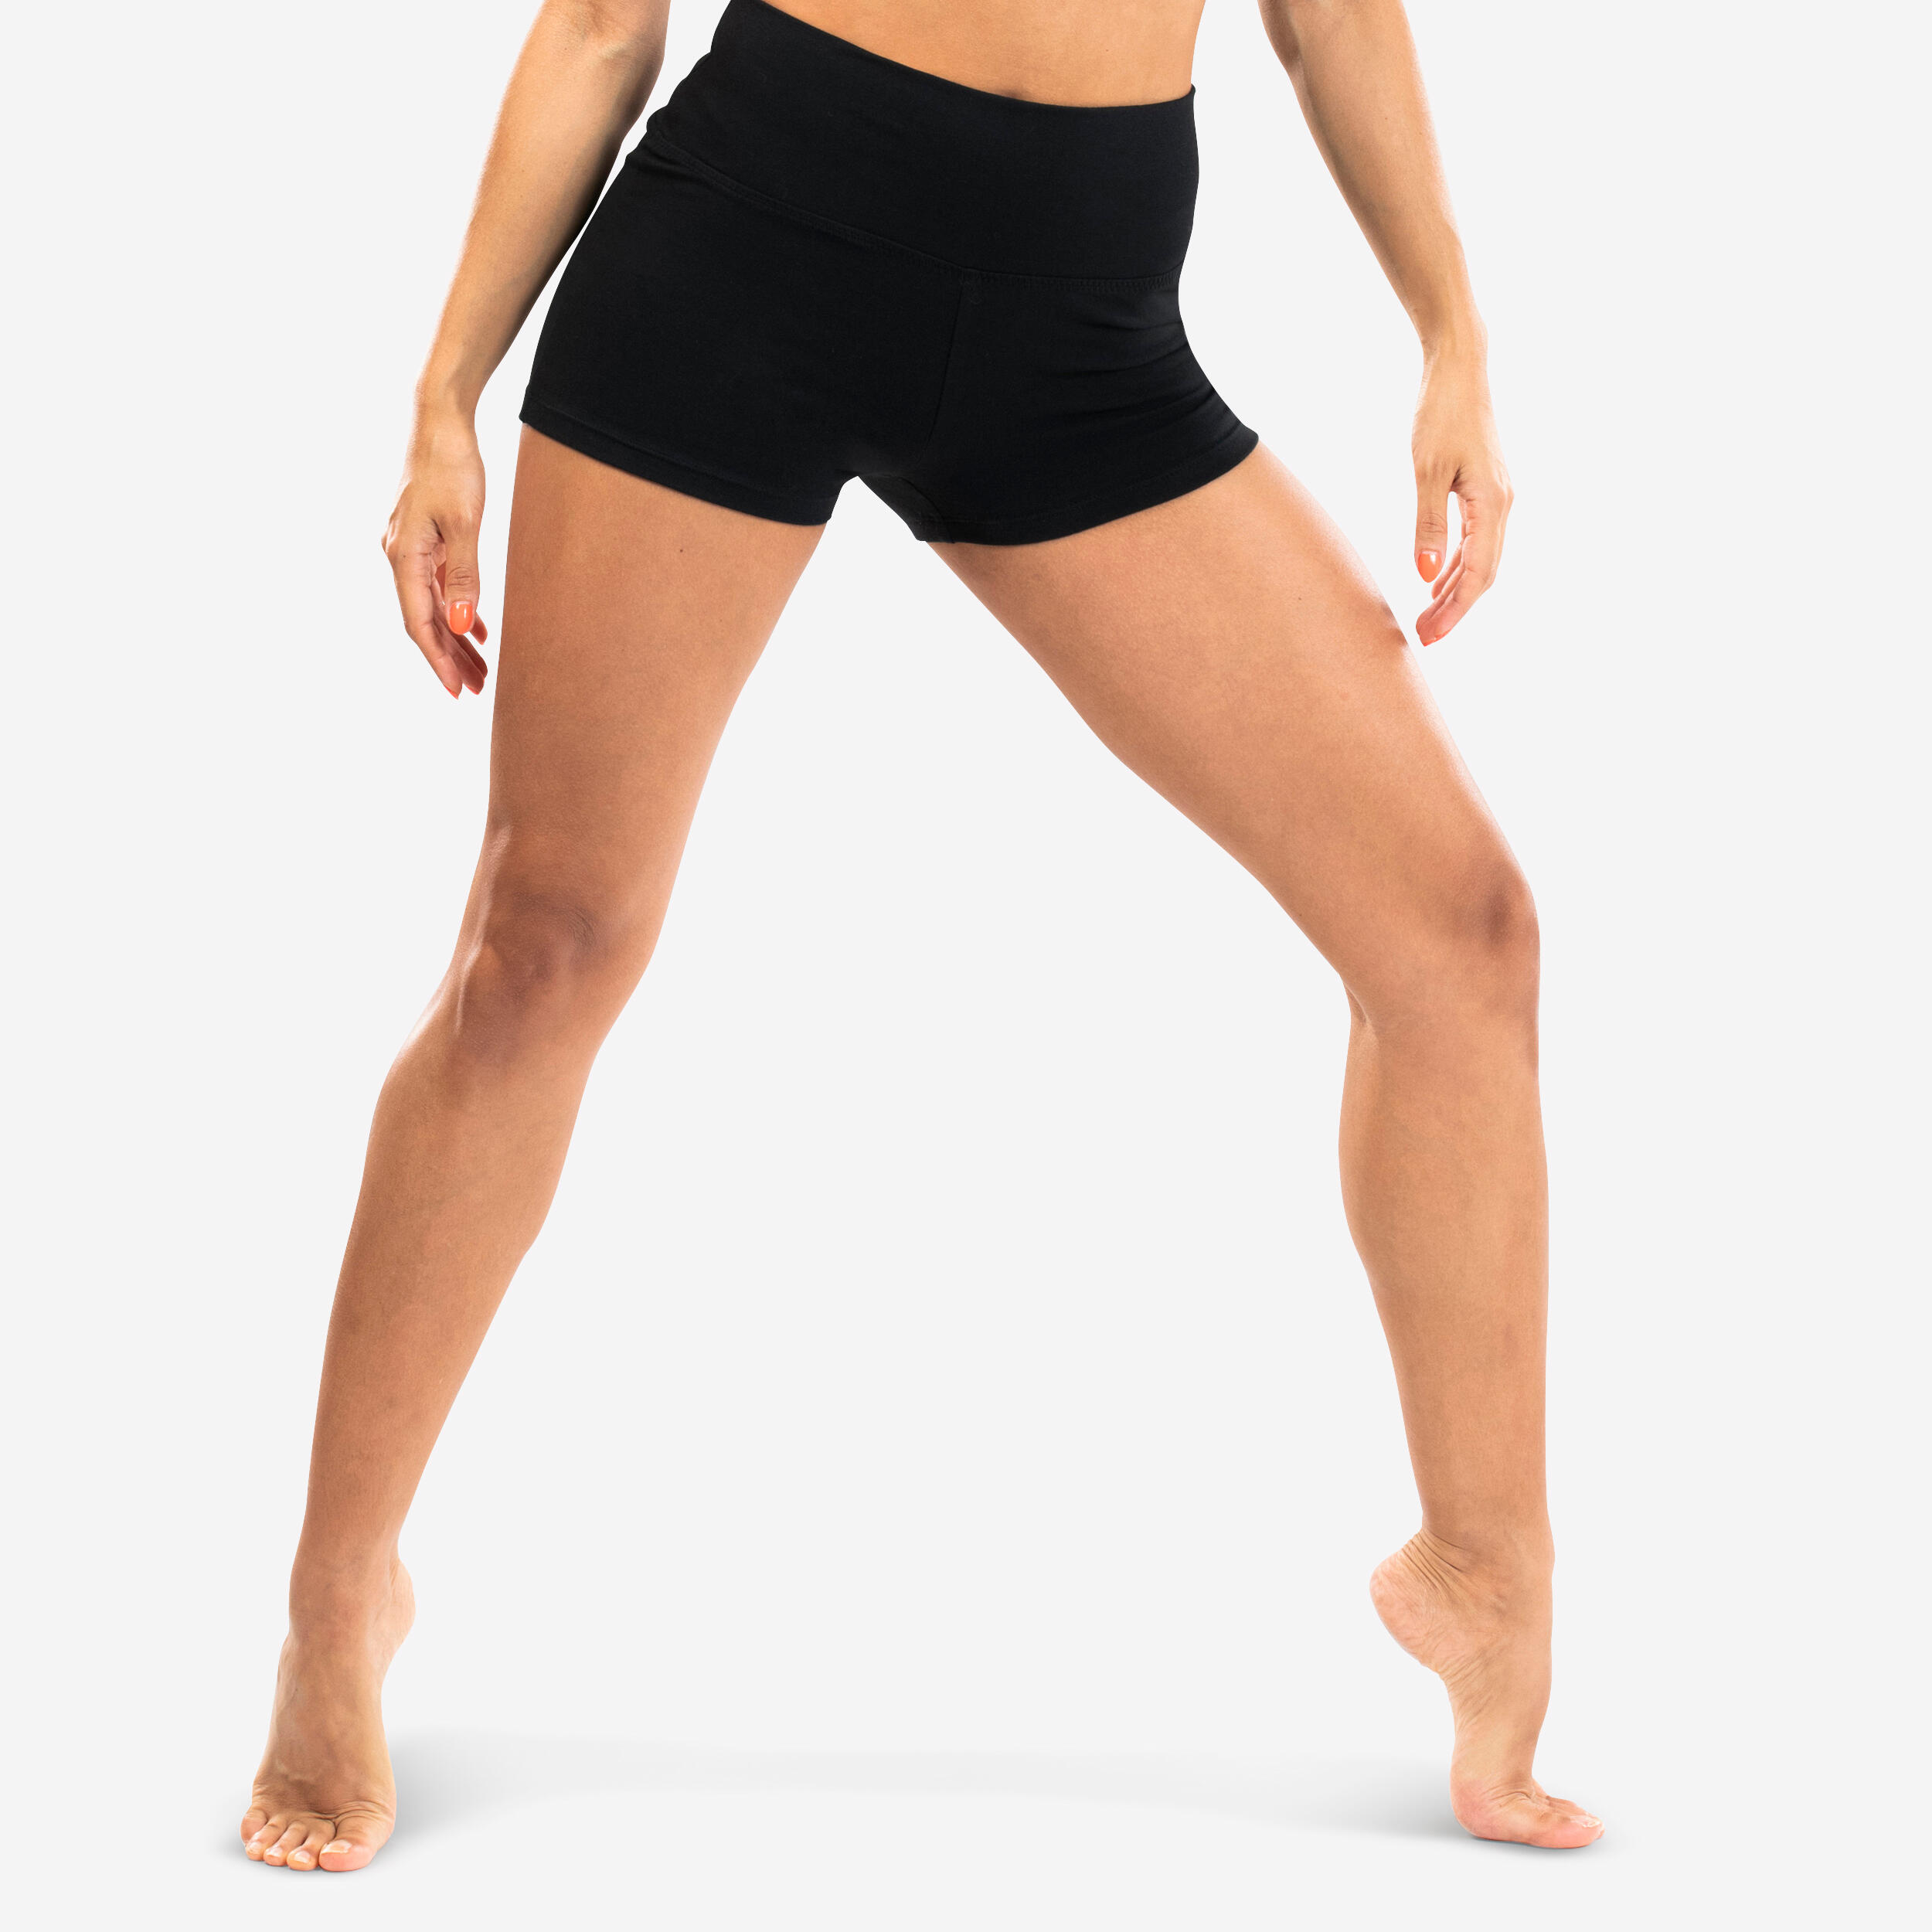 Black velour shorts girls gymnastics dance shorts best quality 